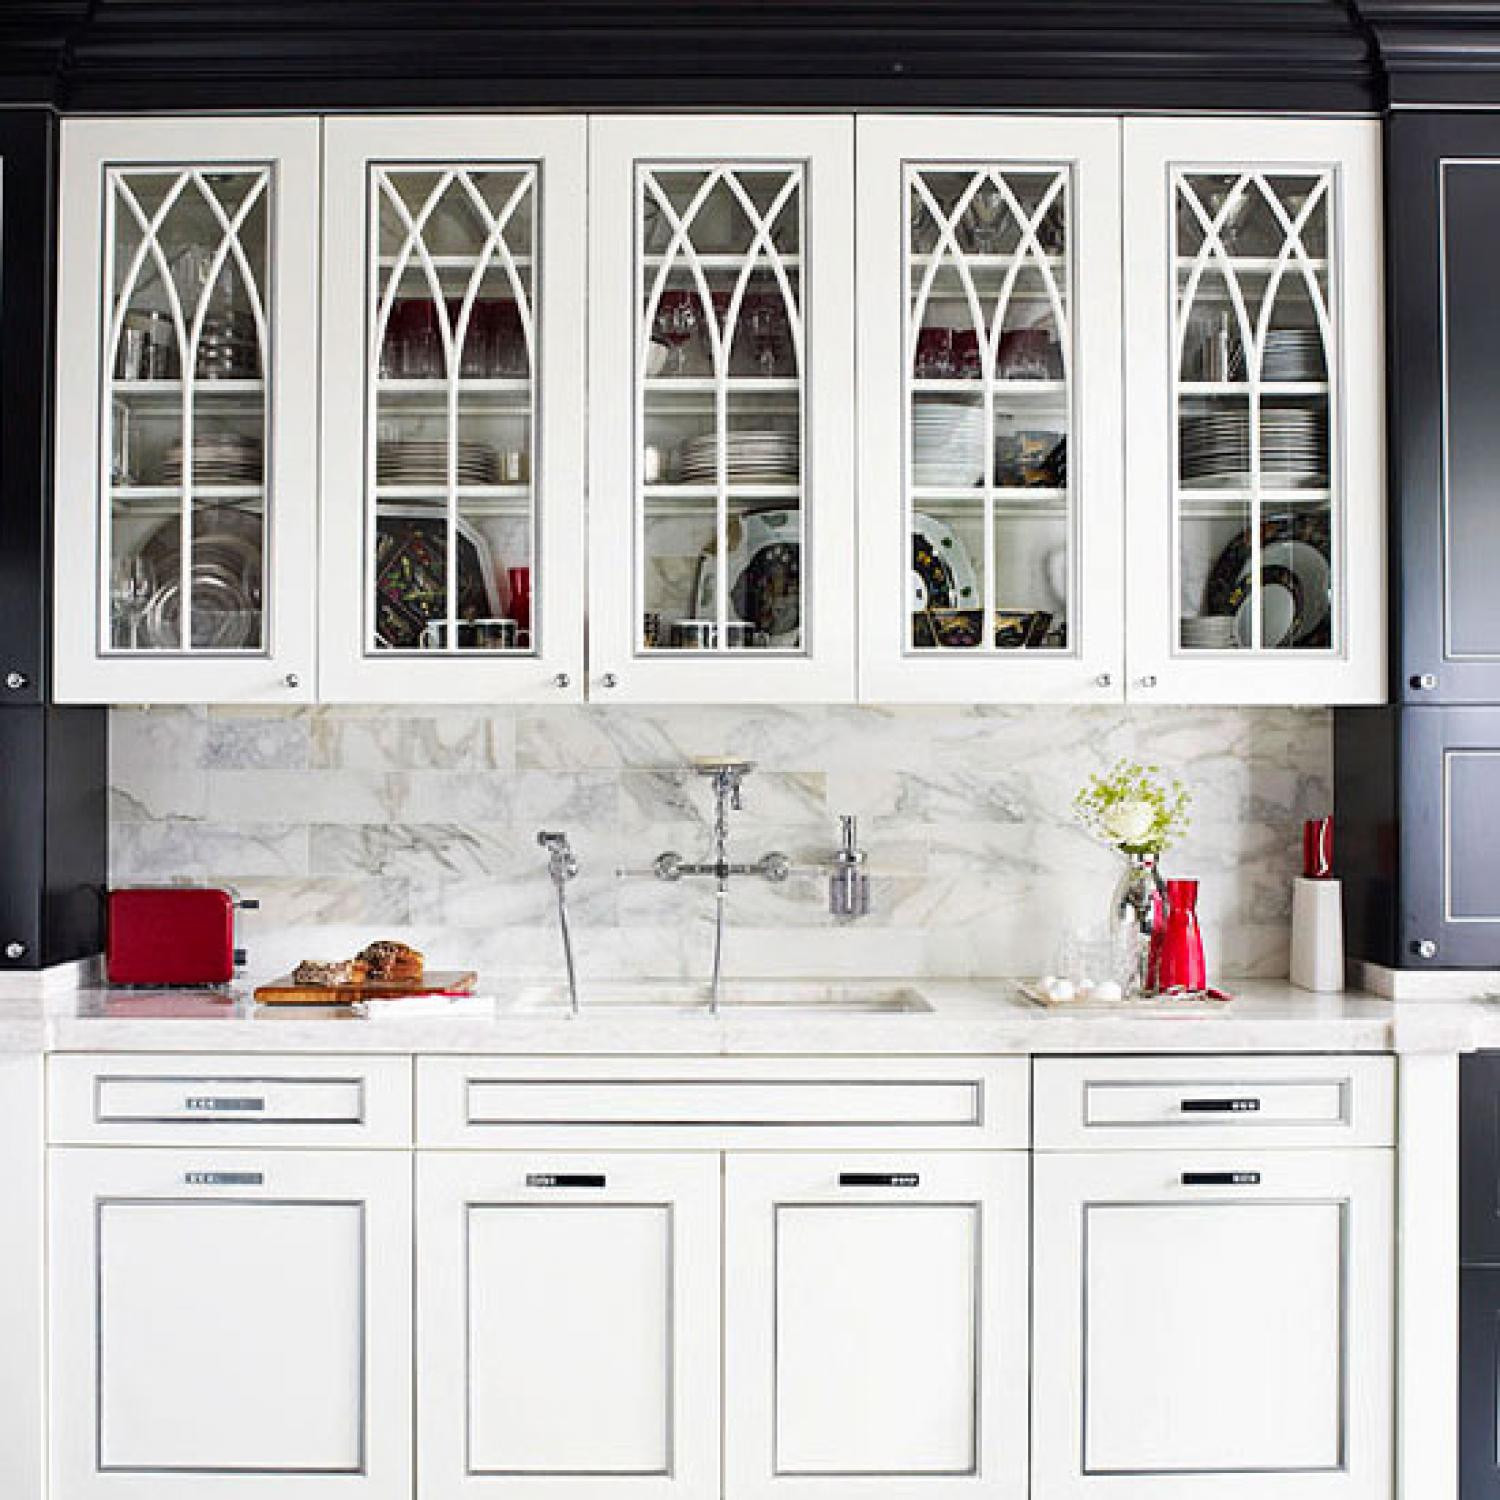 White Kitchen Cabinet Glass Doors
 Distinctive Kitchen Cabinets with Glass Front Doors